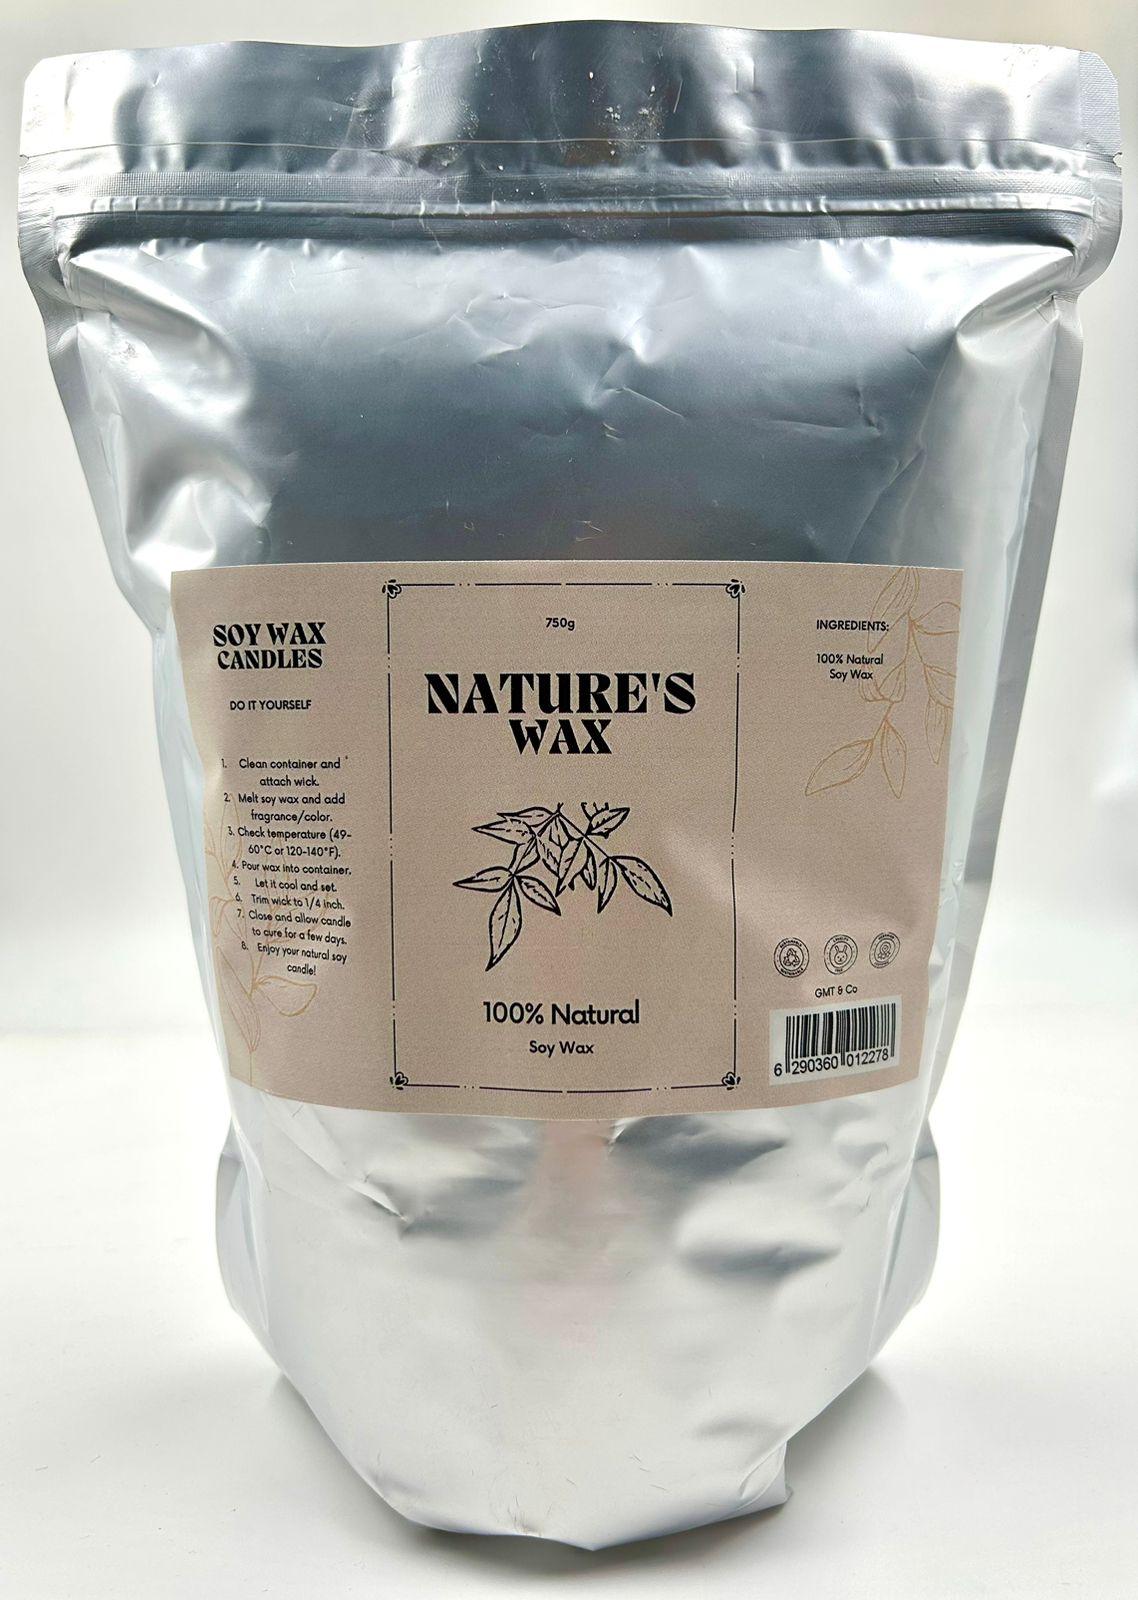 Natures wax - soy wax, 750 g